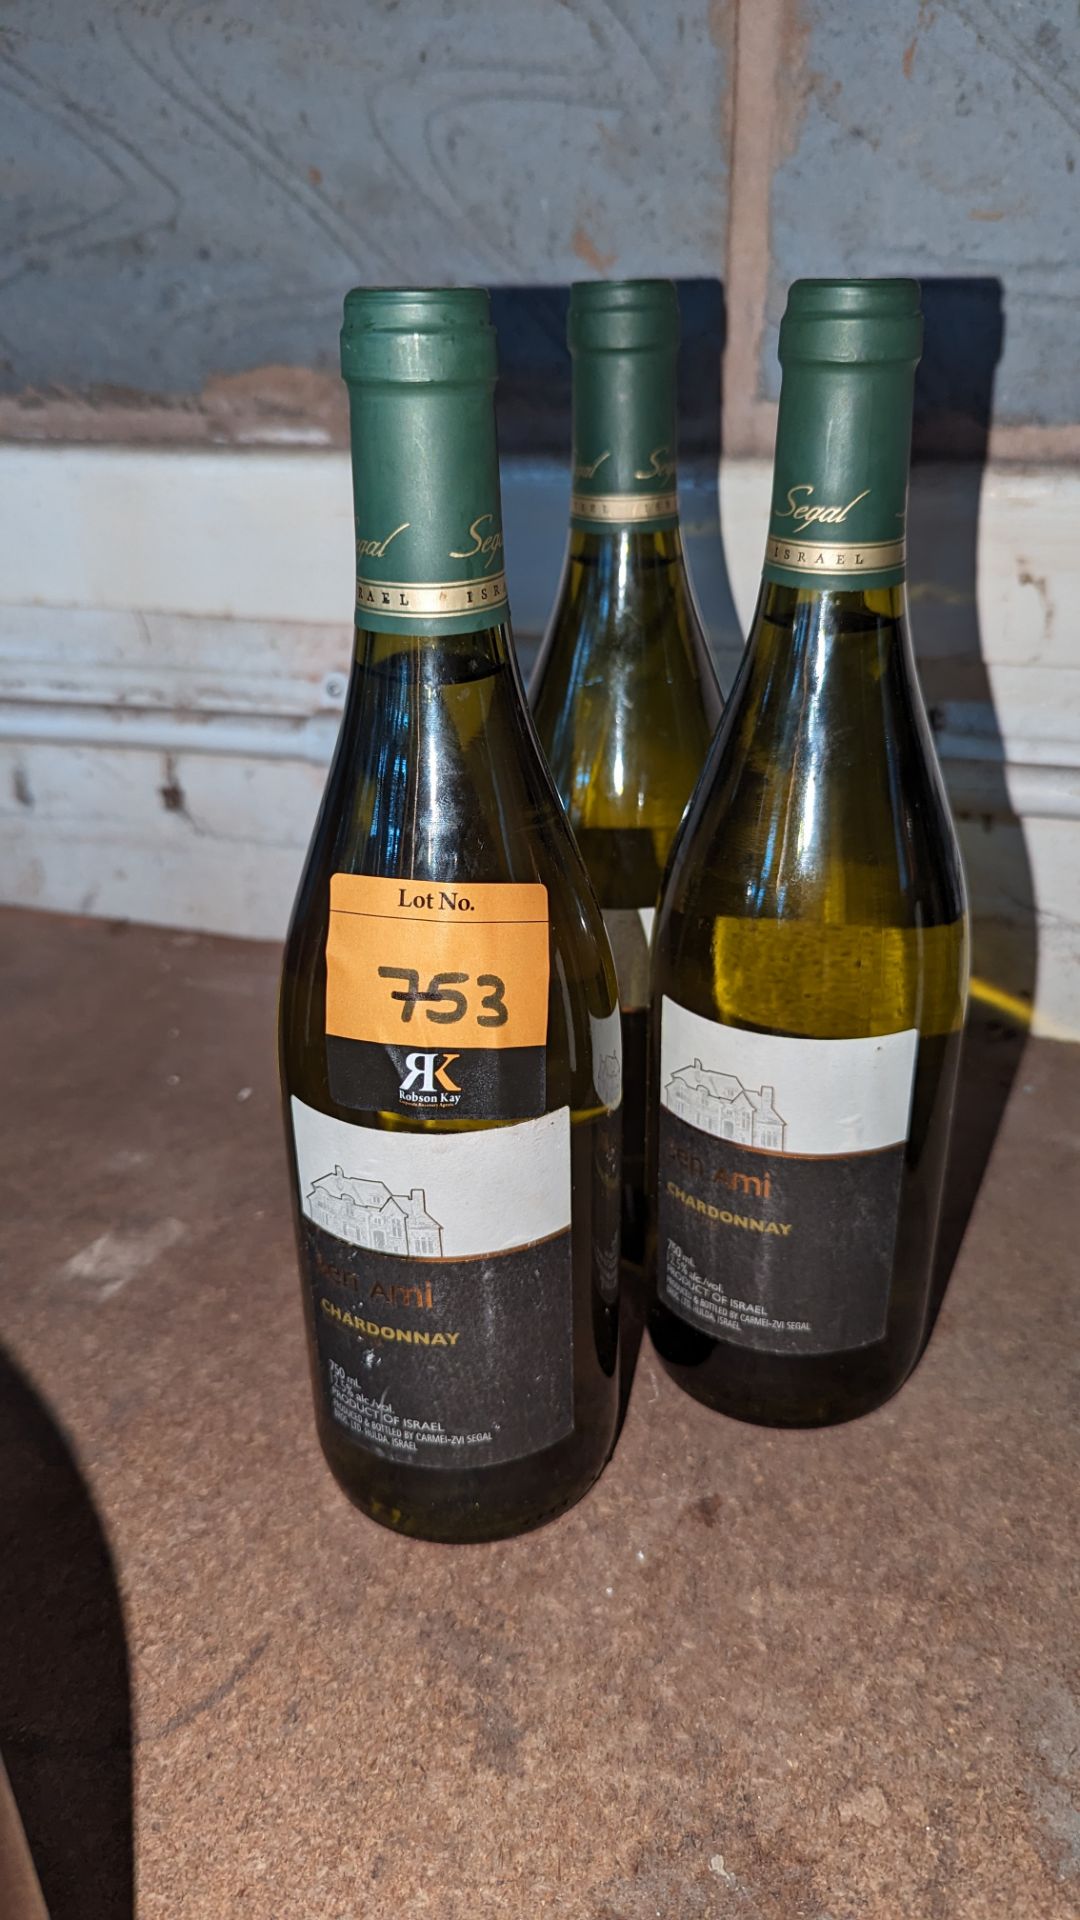 3 bottles of Ben Ami 2016 Chardonnay Israeli white wine sold under AWRS number XQAW00000101017 - Image 3 of 3